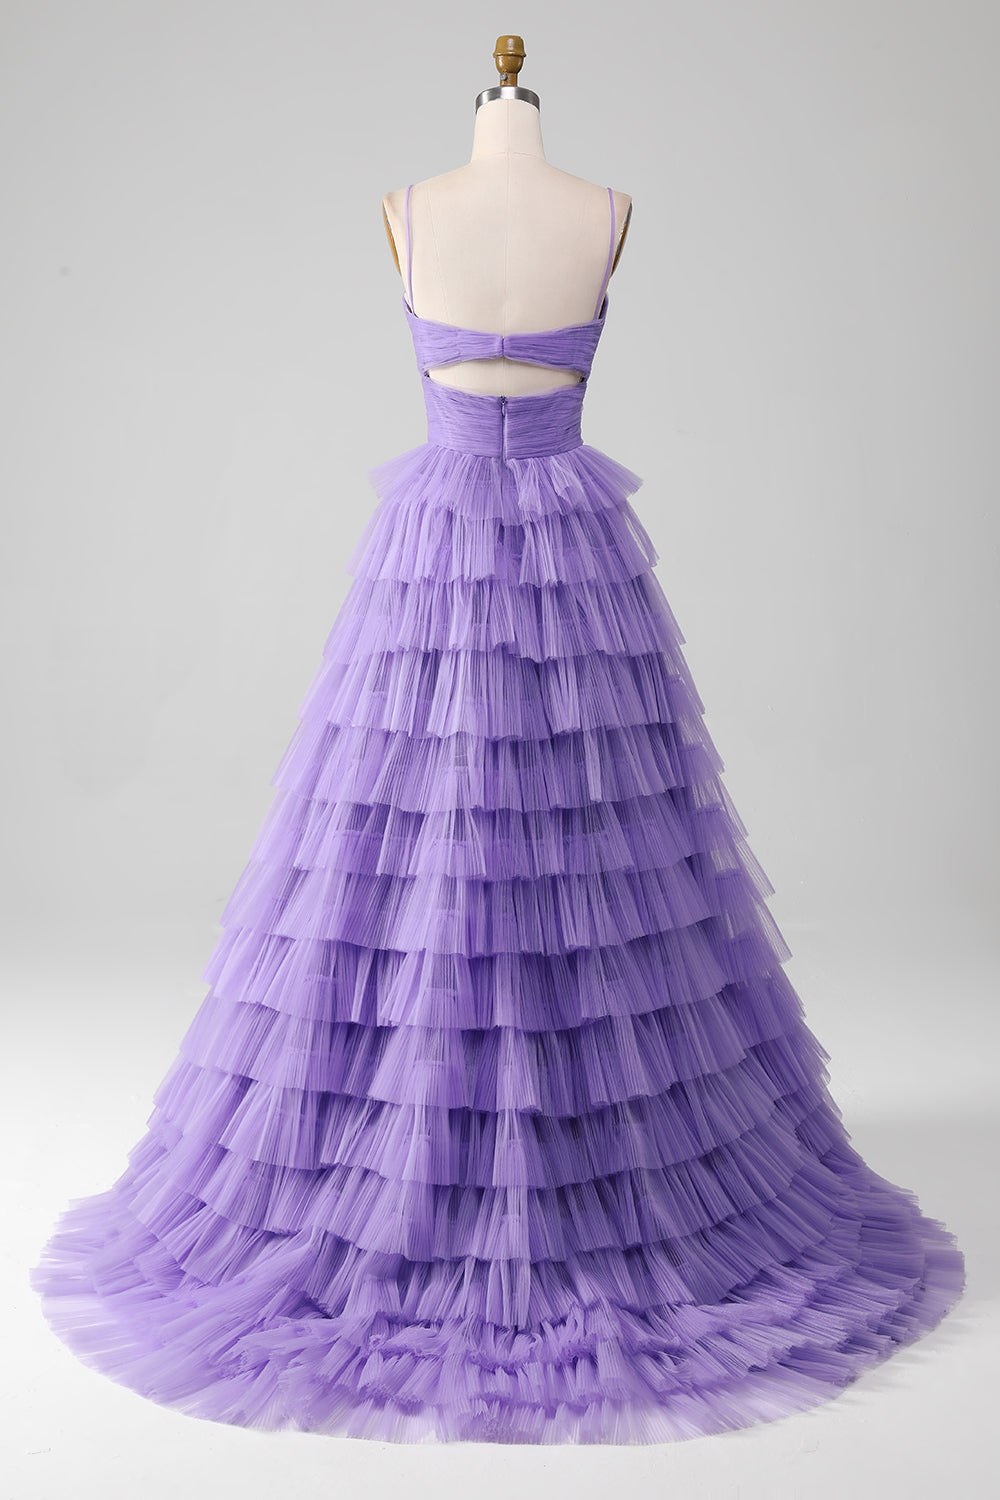 Zapaka Women Cocktail Dress Light Purple Tulle A-Line Short Party Dress, LightPurple / US6